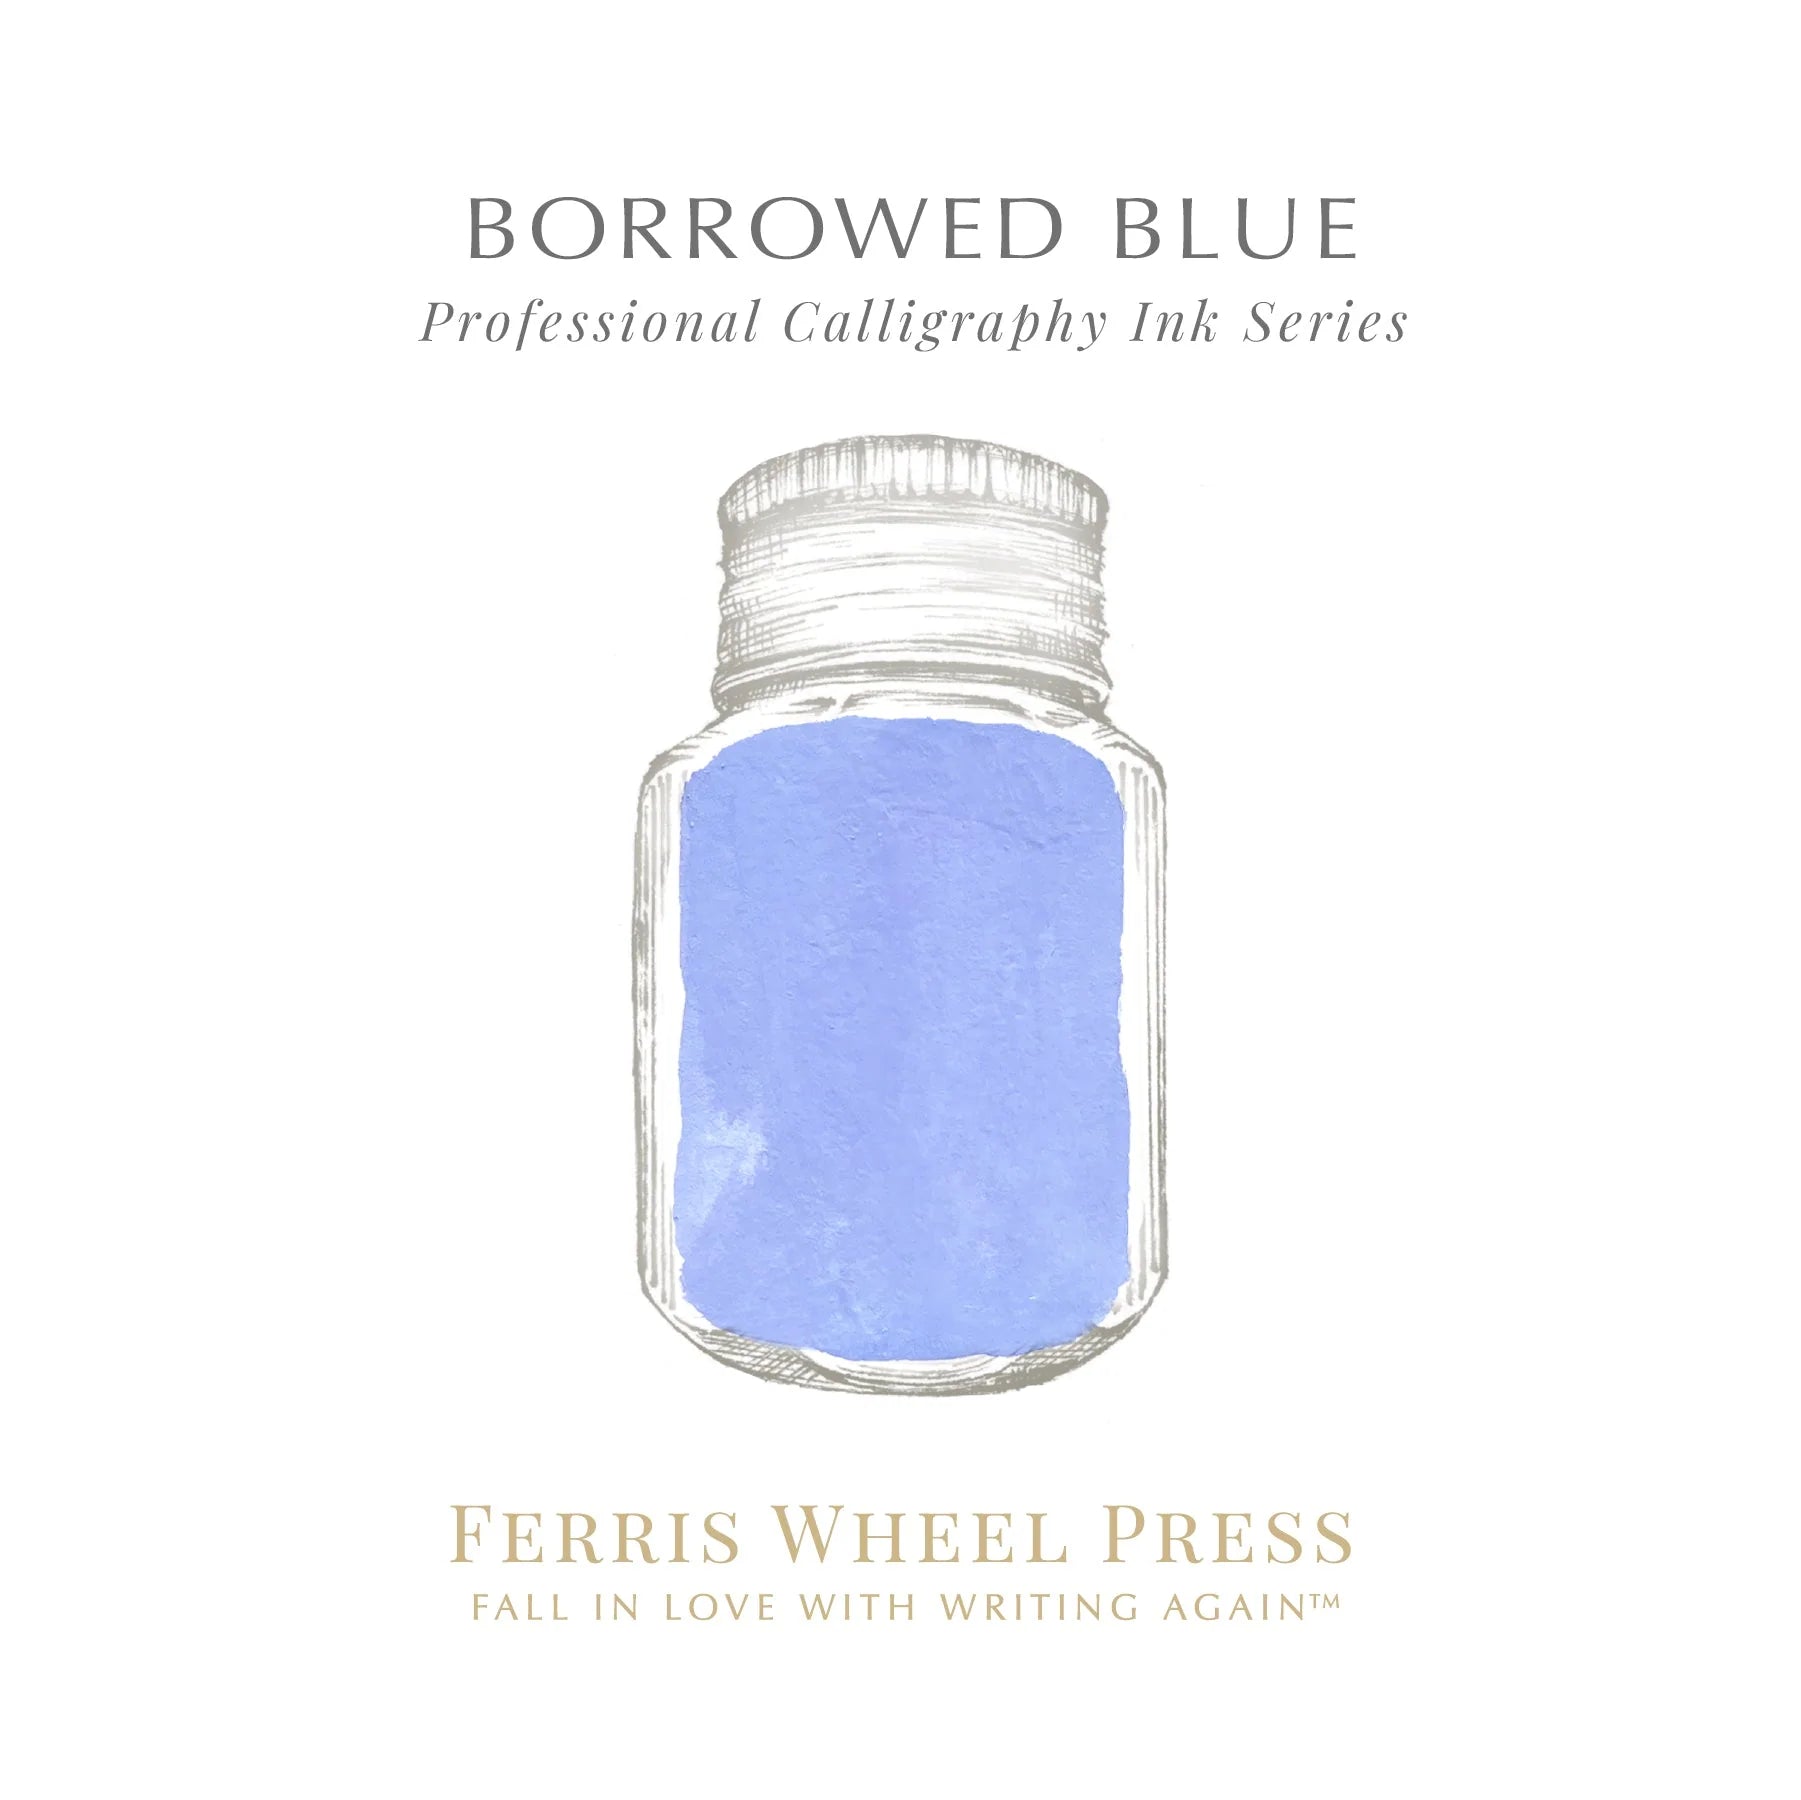 Ferris Wheel Press - 28ml Borrowed Blue Calligraphy Ink-Inkt-DutchMills